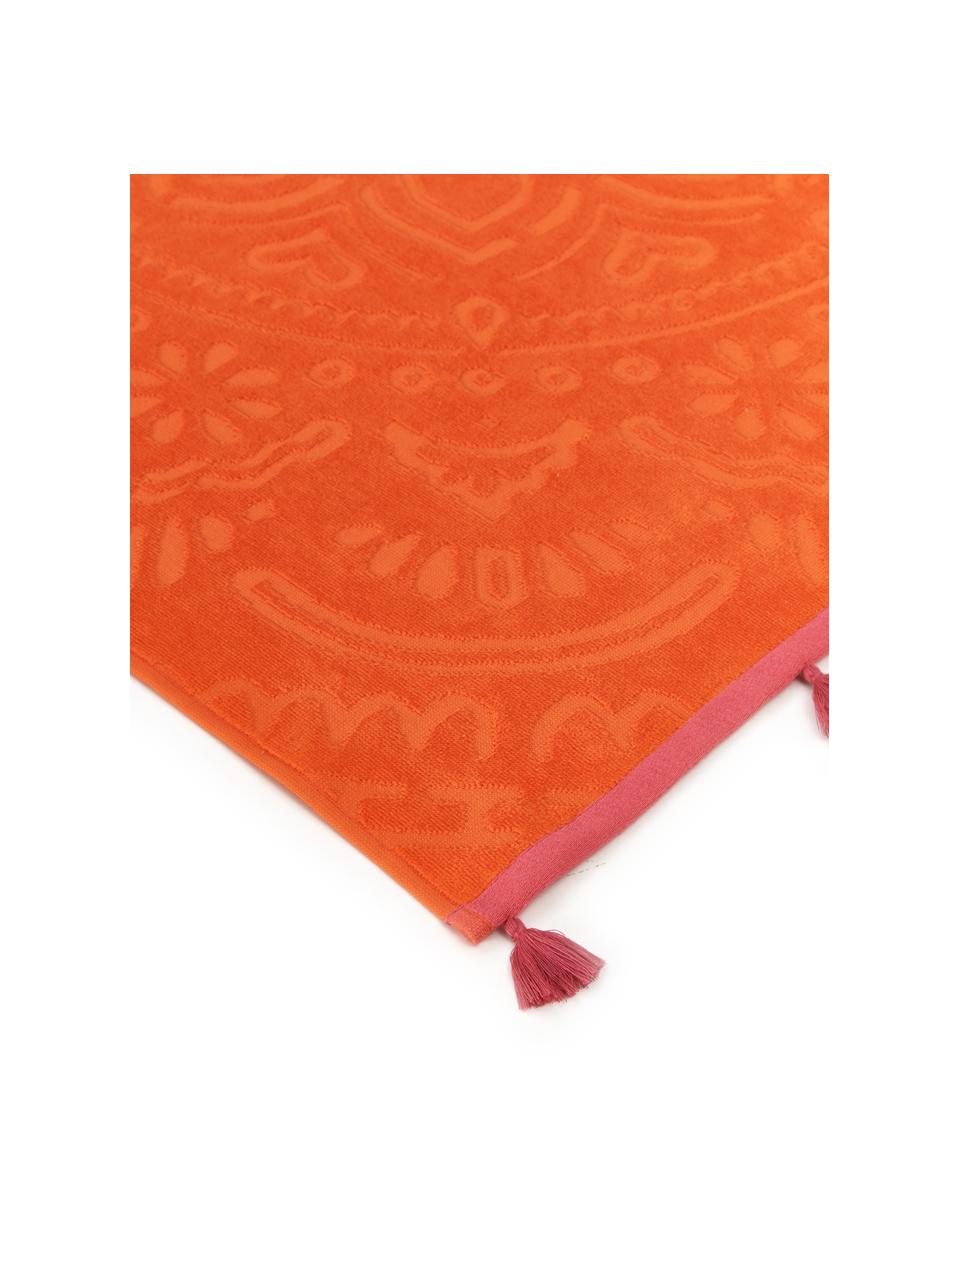 Strandlaken Mandala, 100% katoen, Oranje, roze, B 90 x L 160 cm